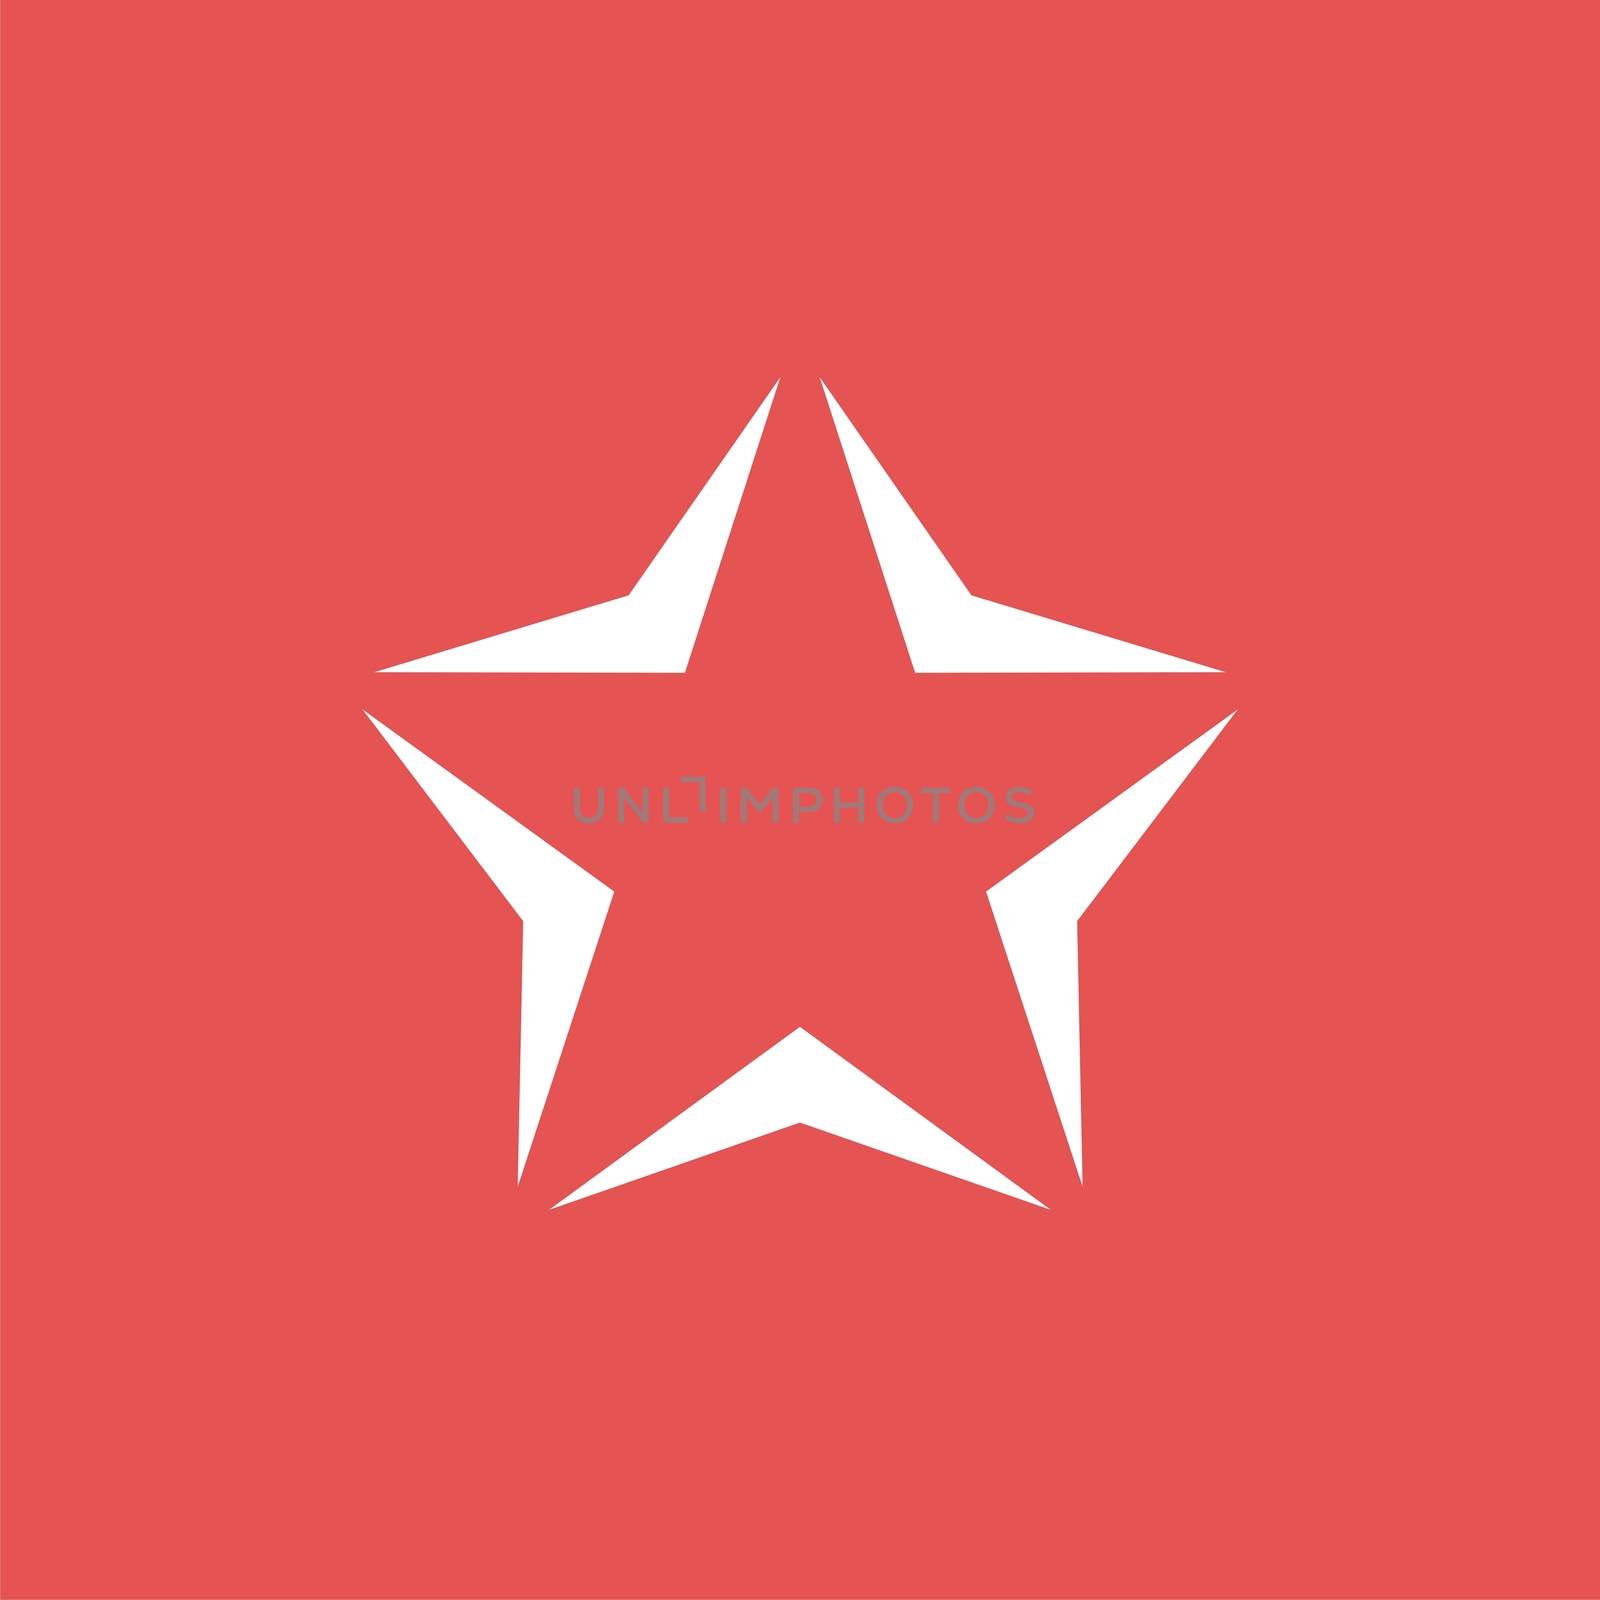 Monochrome Star vector Logo Template Illustration Design. Vector EPS 10. by soponyono1